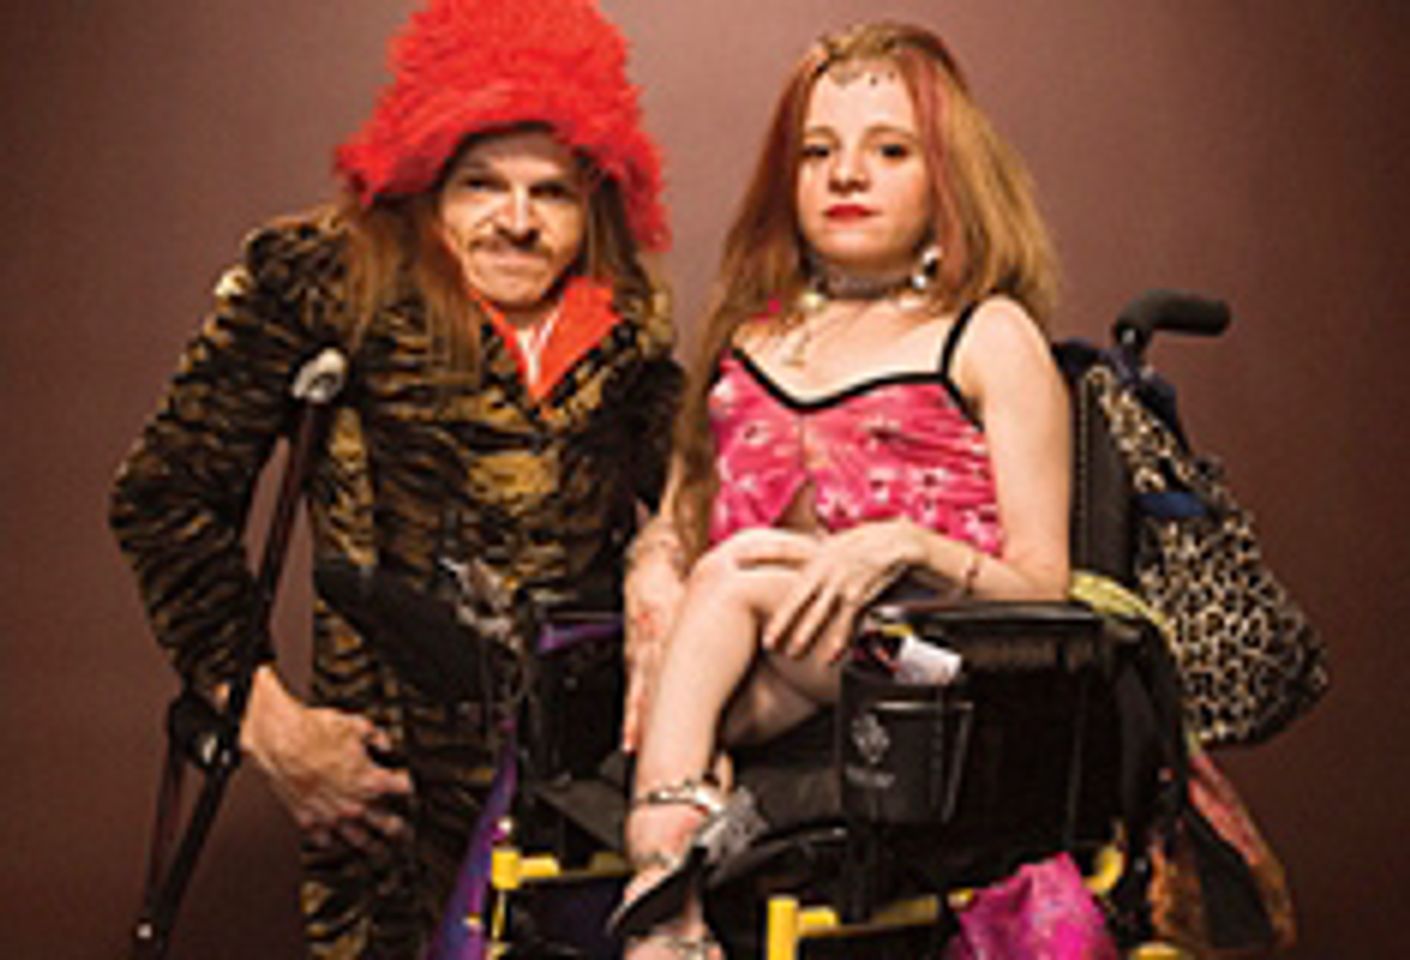 Gimps Gone Wild Opens Doors for Disabled Models